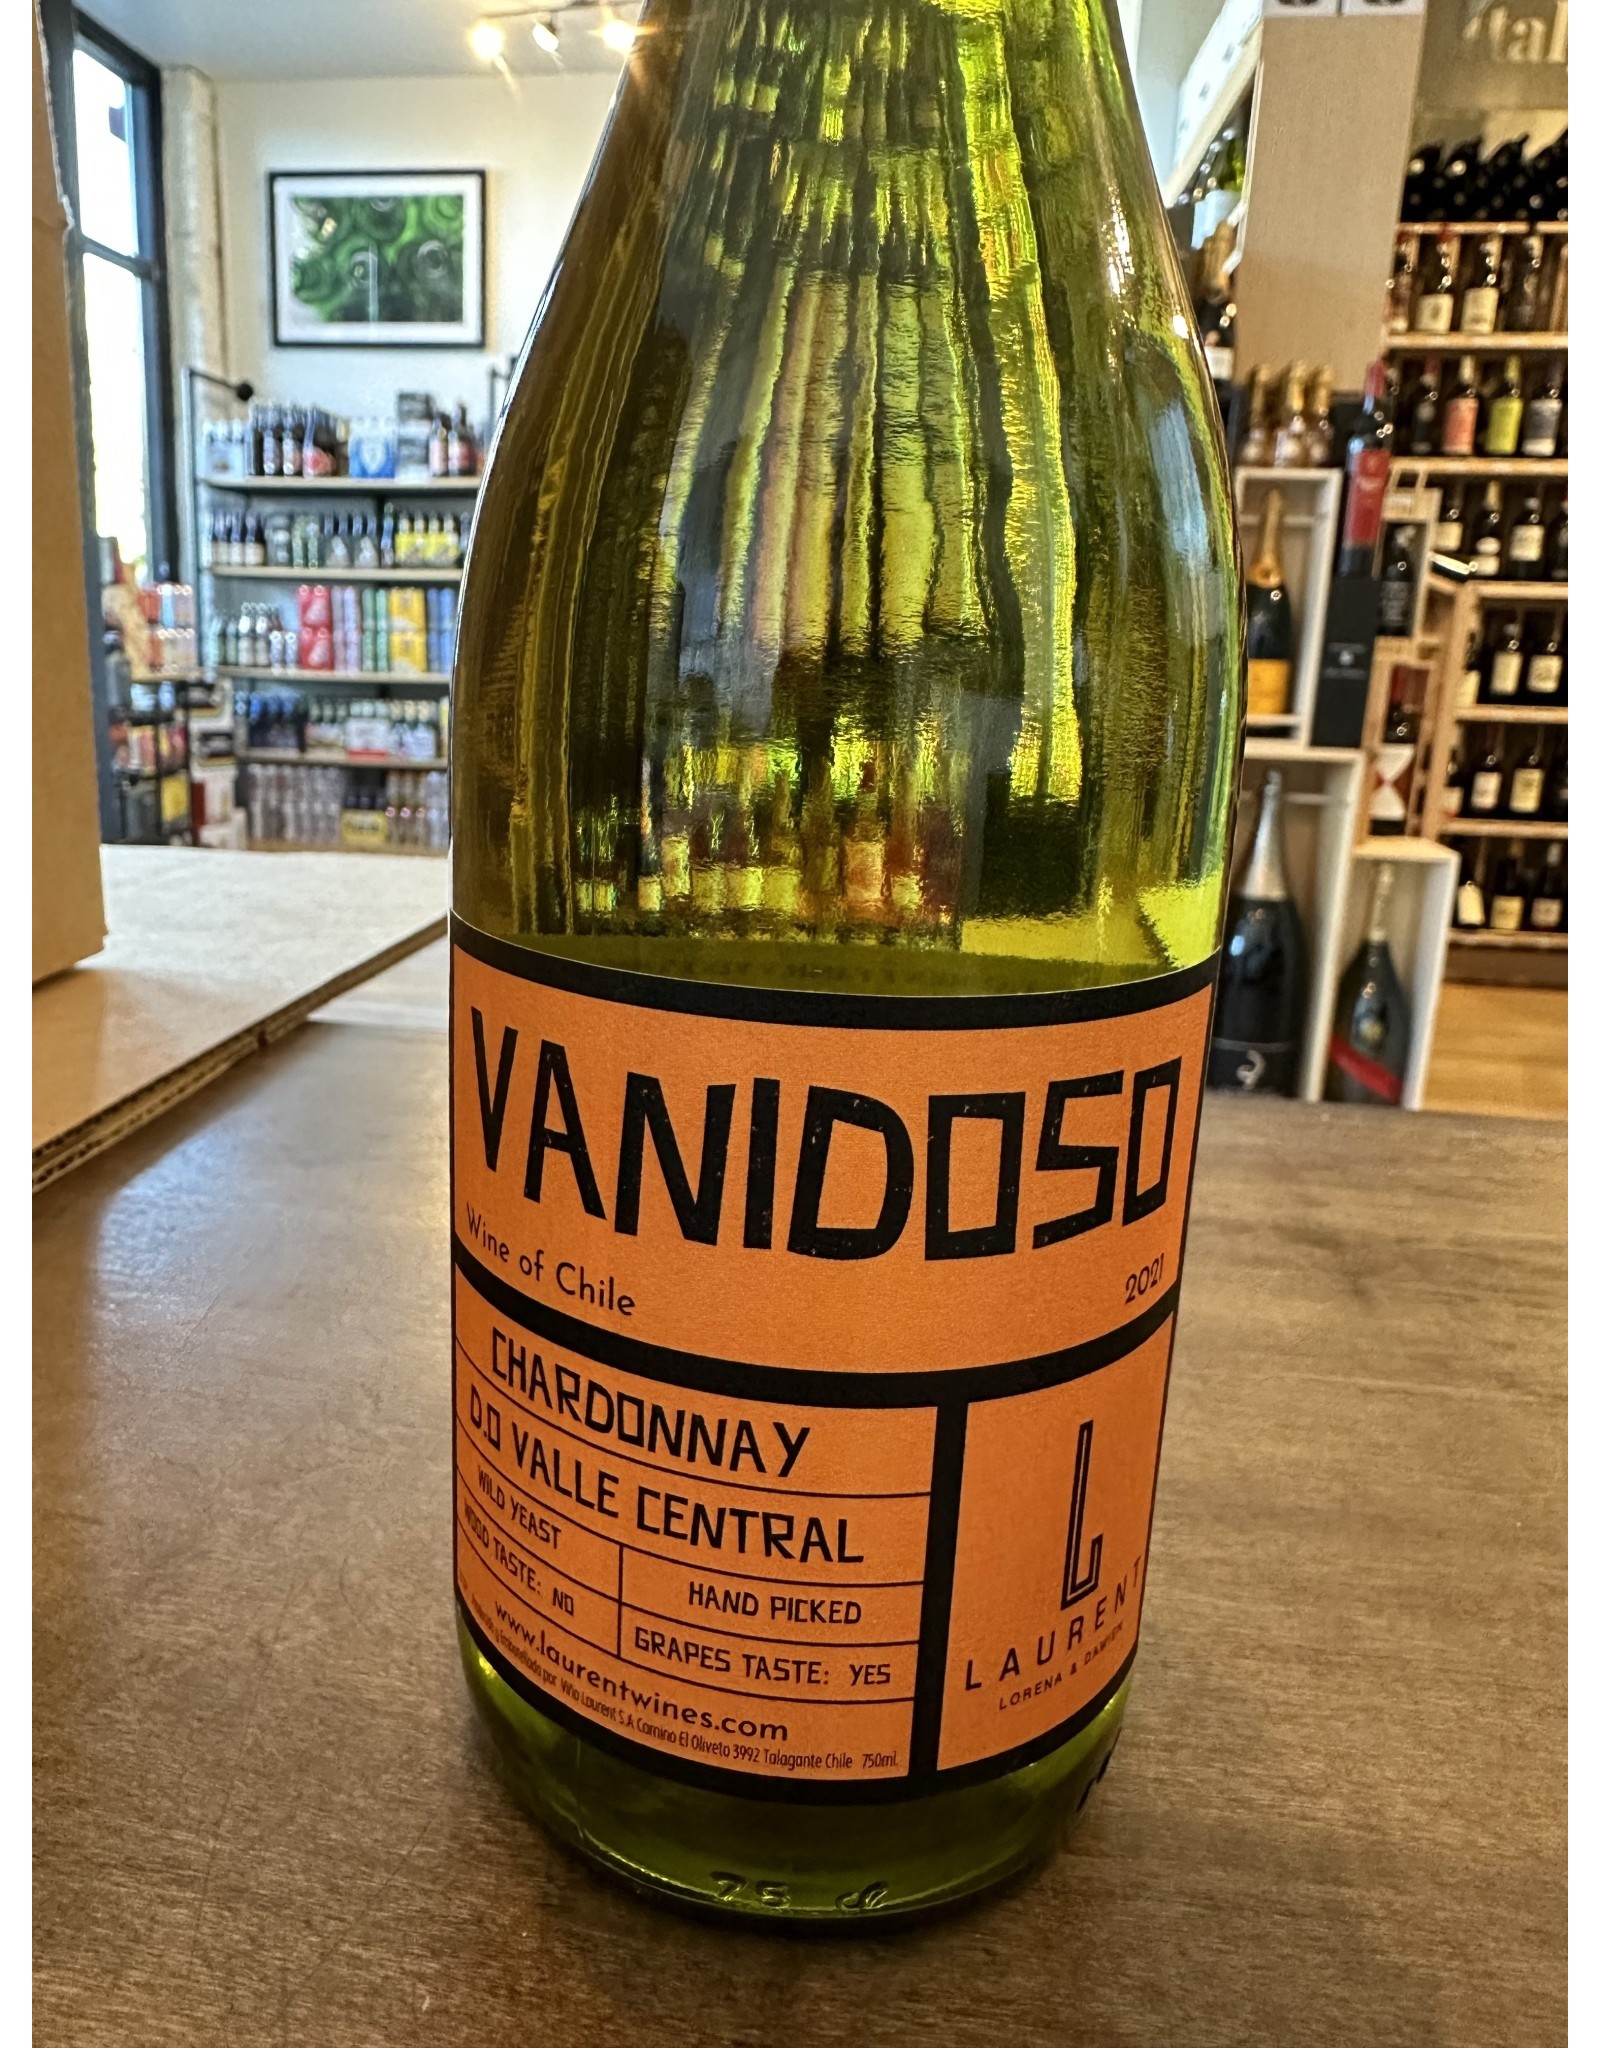 Laurent Family Vanidoso Valle Central Chardonnay 2021